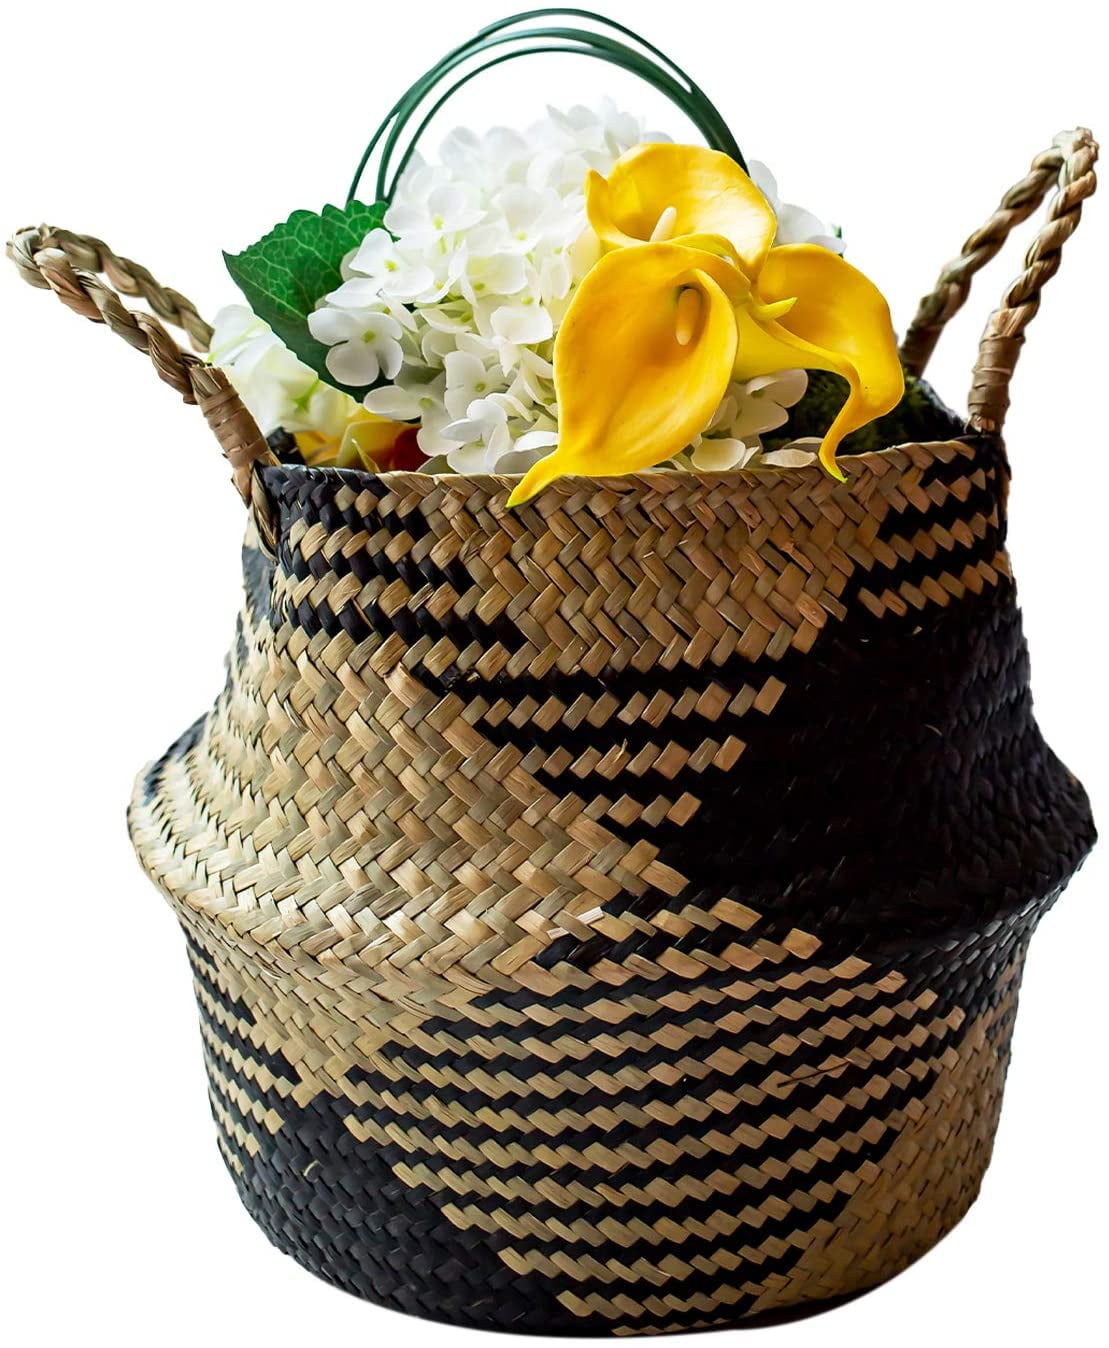 Seagrass Woven Storage Basket Flower Plants Straw Pots Bag Laundry Decor S 